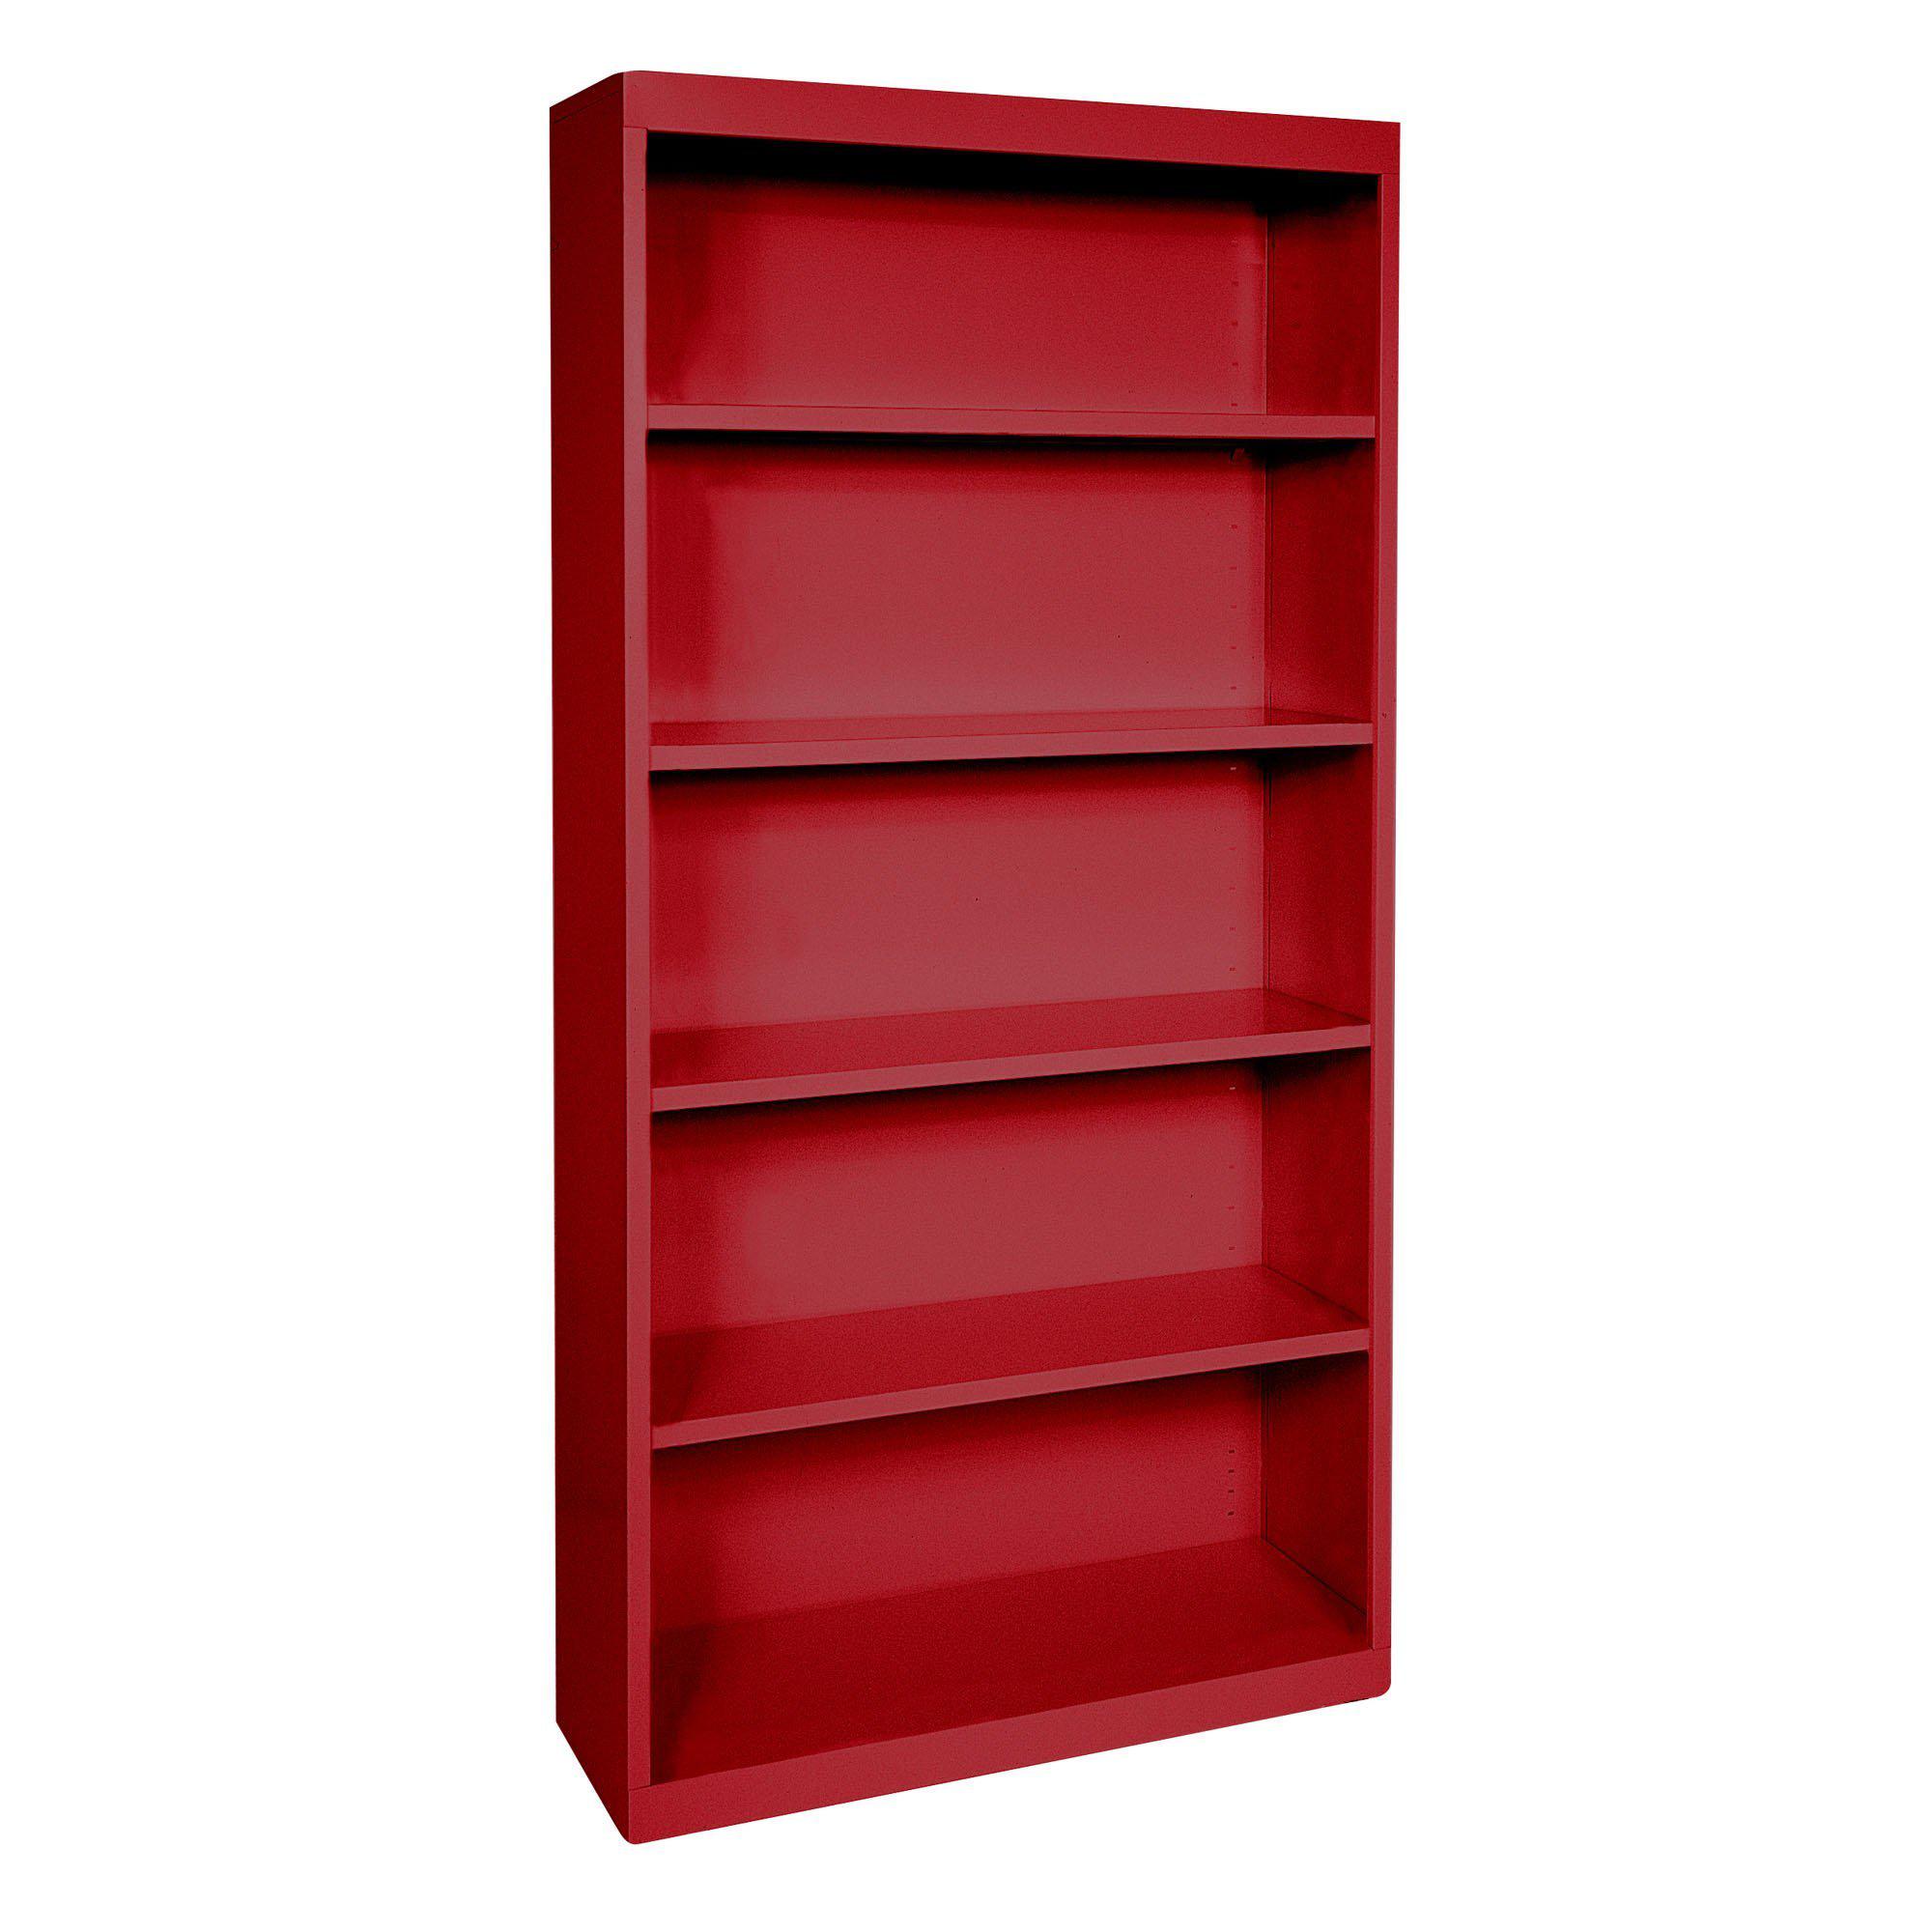 Elite Series Welded Steel Bookcase, 4 Shelves and Bottom Shelf, 36 x 18 x 72, Red